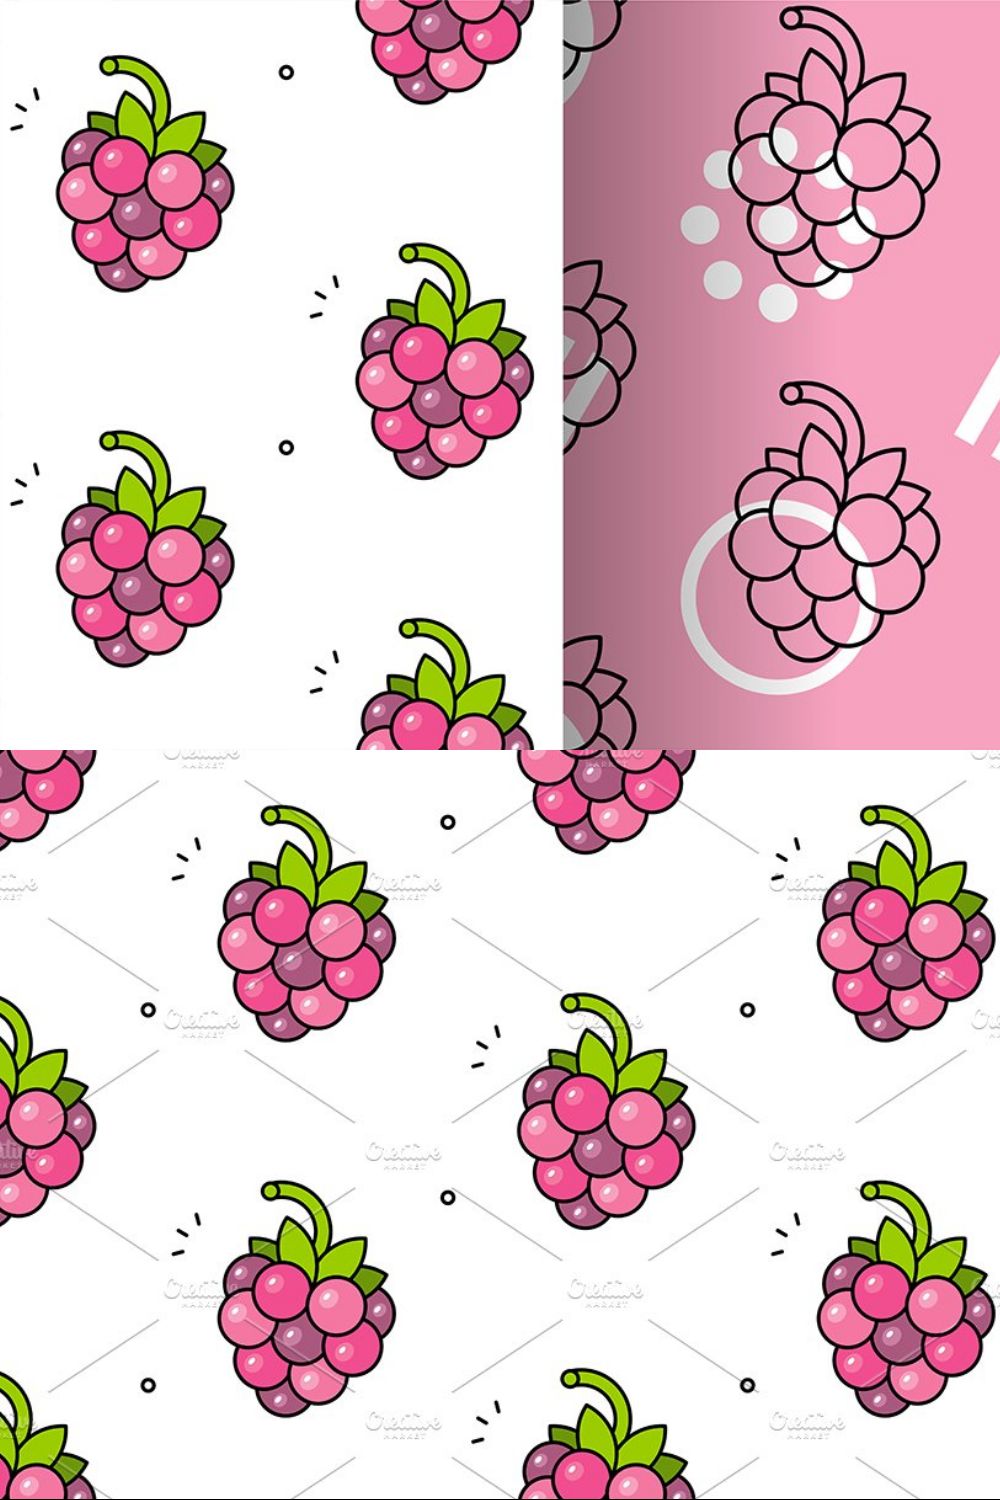 Raspberries seamless pattern pinterest preview image.